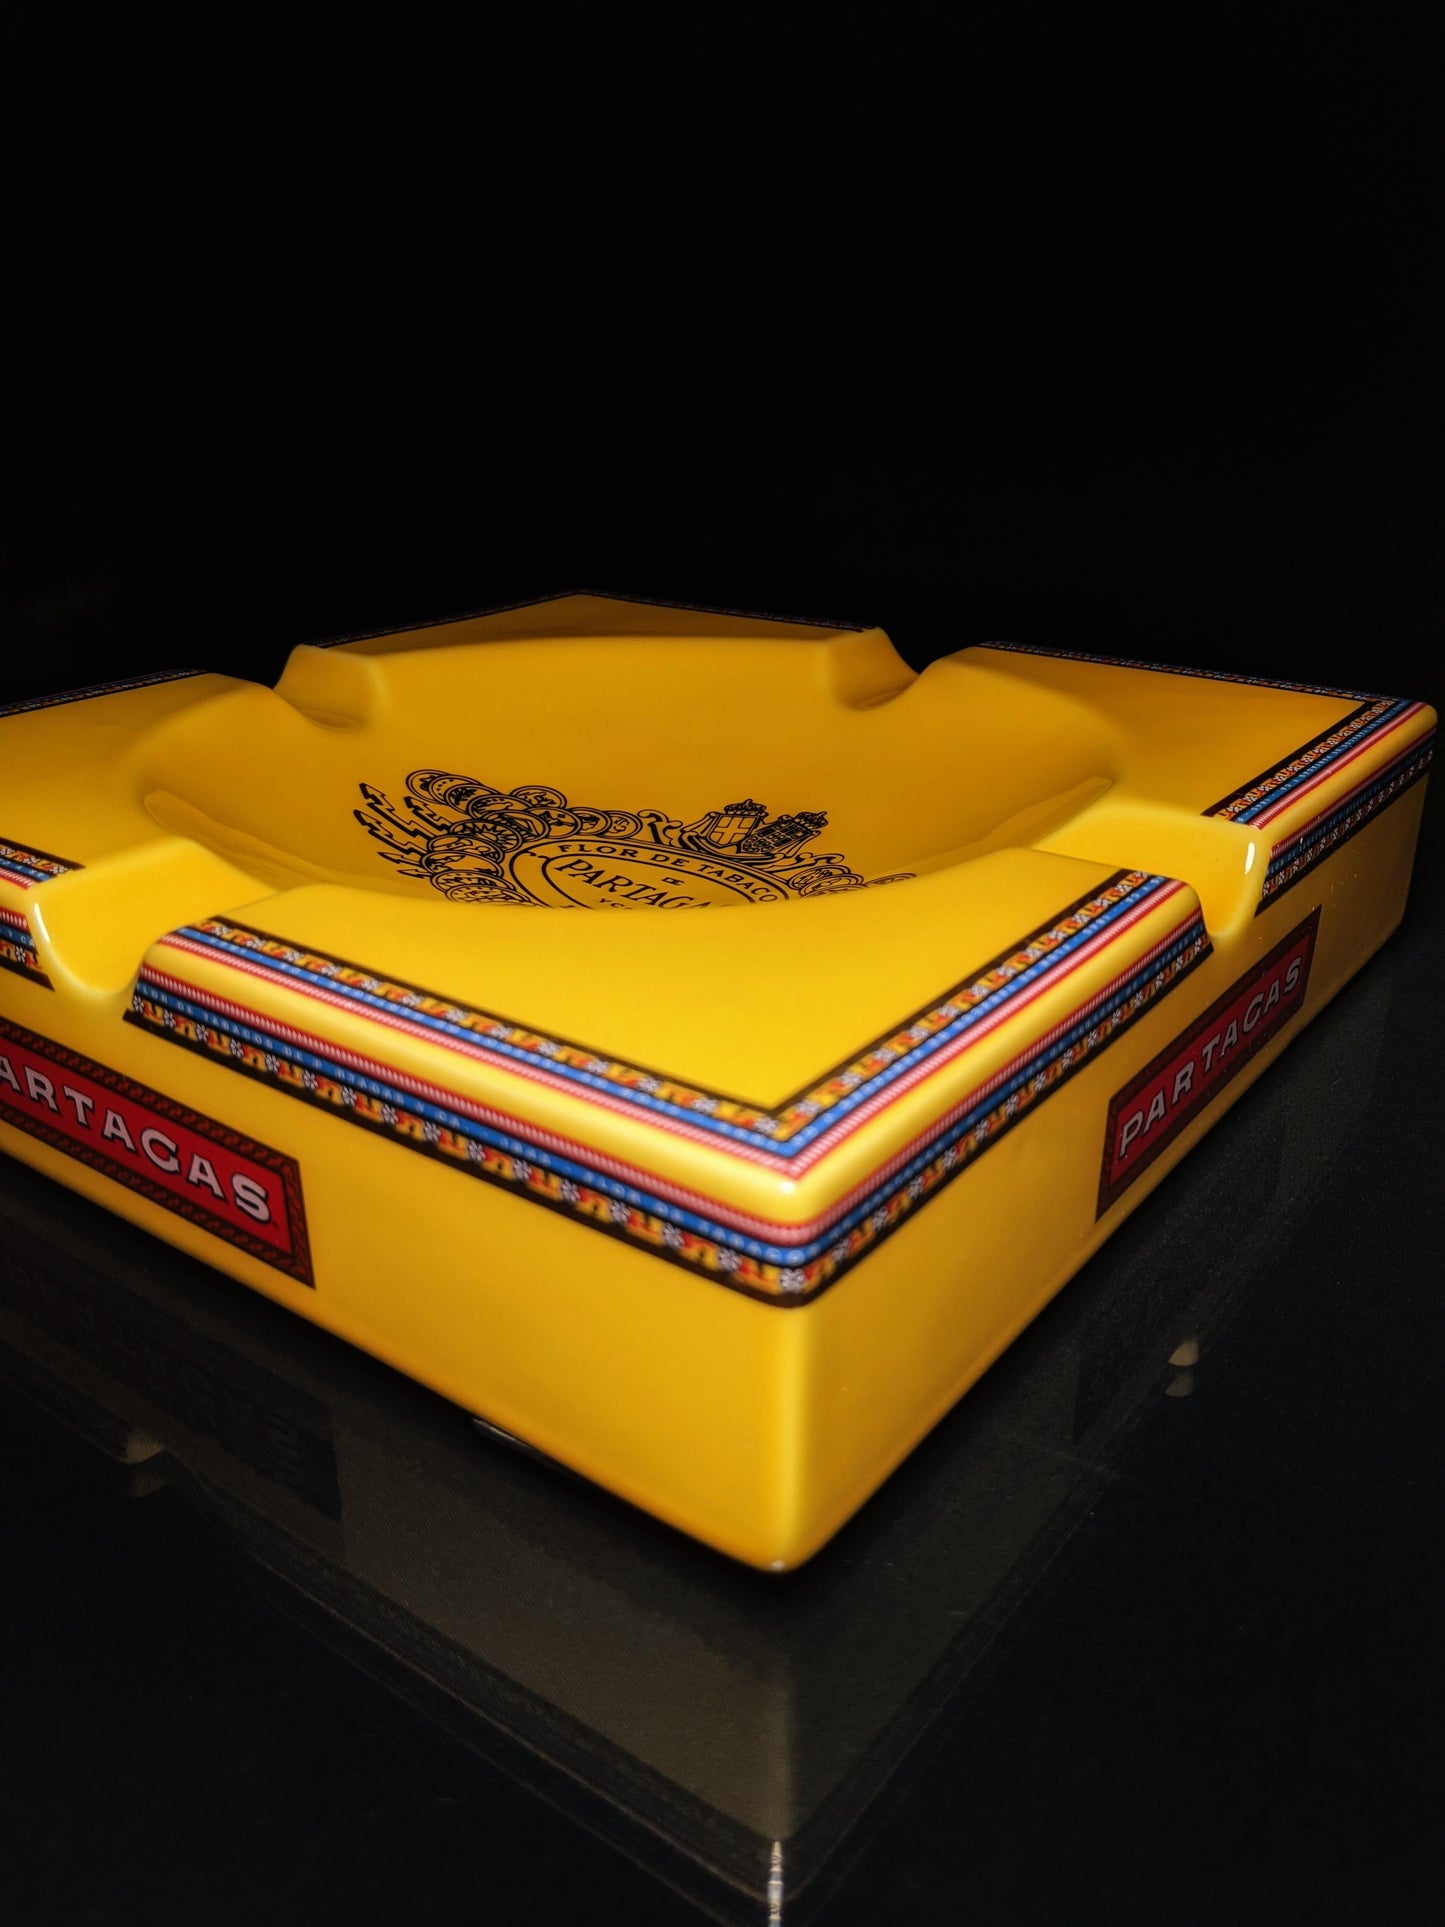 Partagas Ceramic Cigar ashtray in the original box